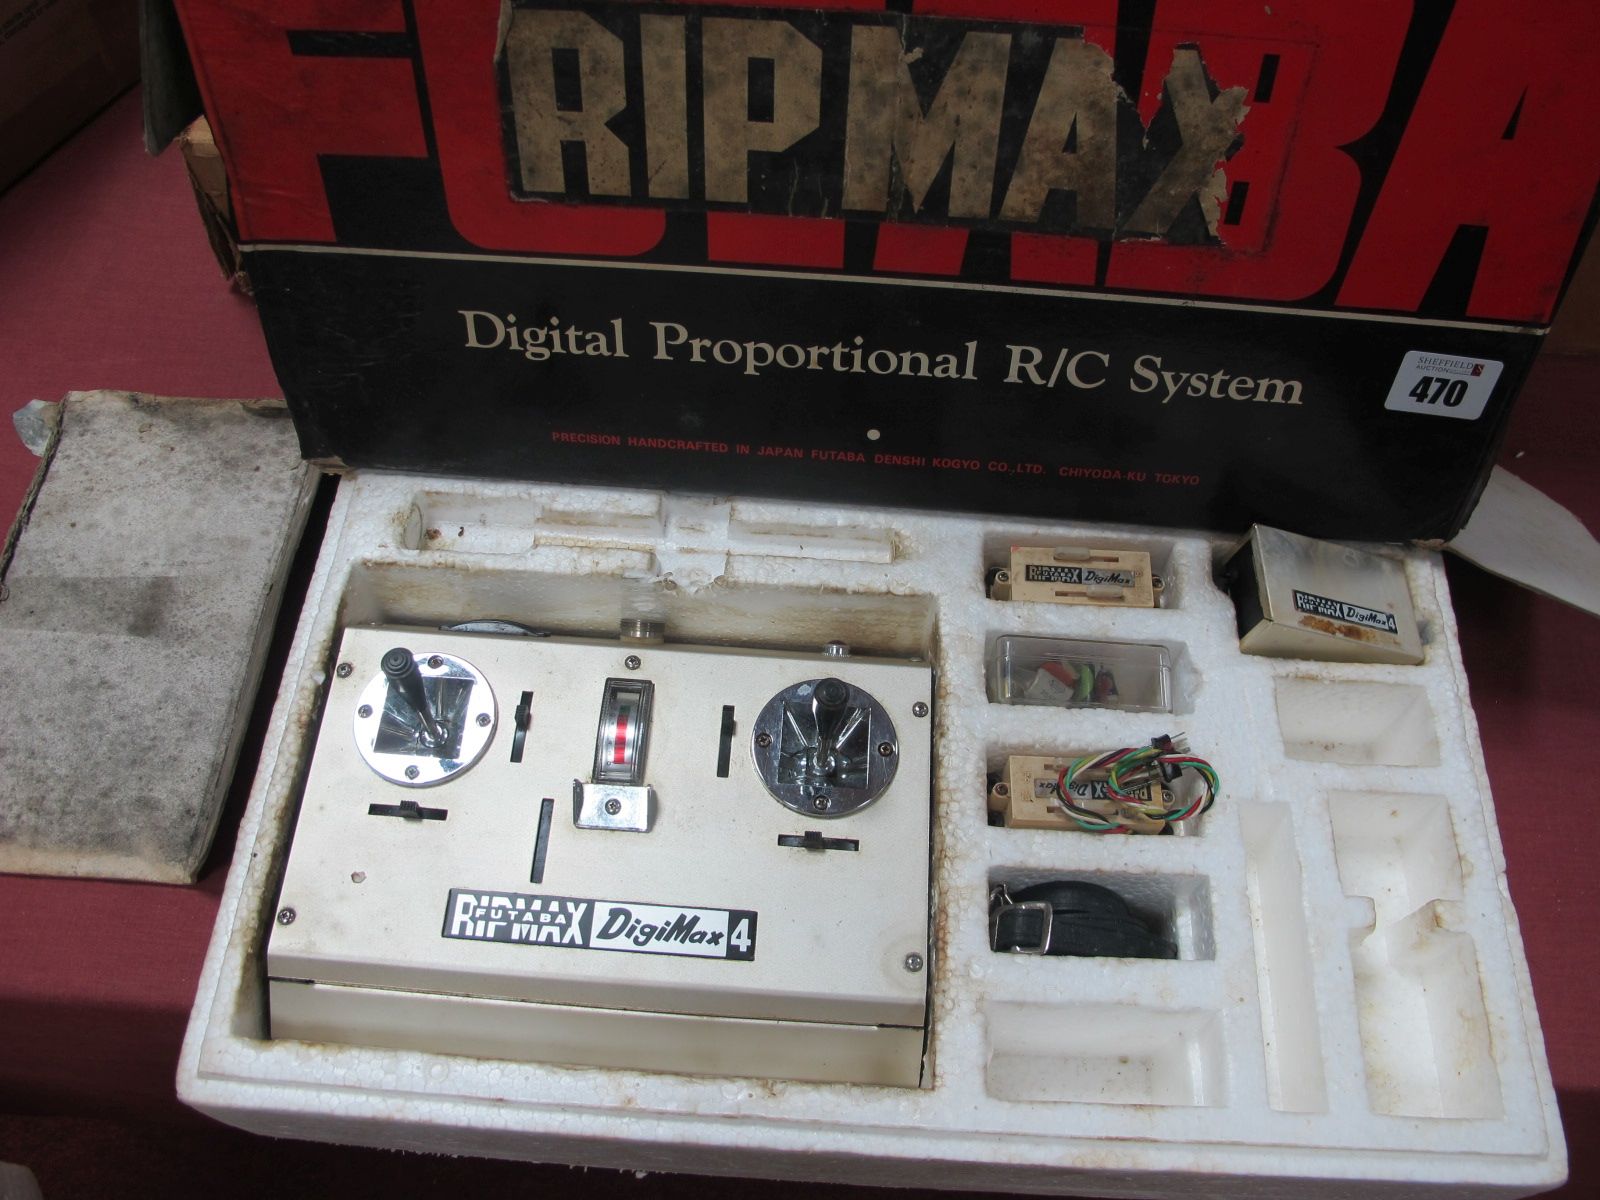 An Interesting Vintage Futaba Digimax 4 Radio Control Transmitter, servos and crystals present, in